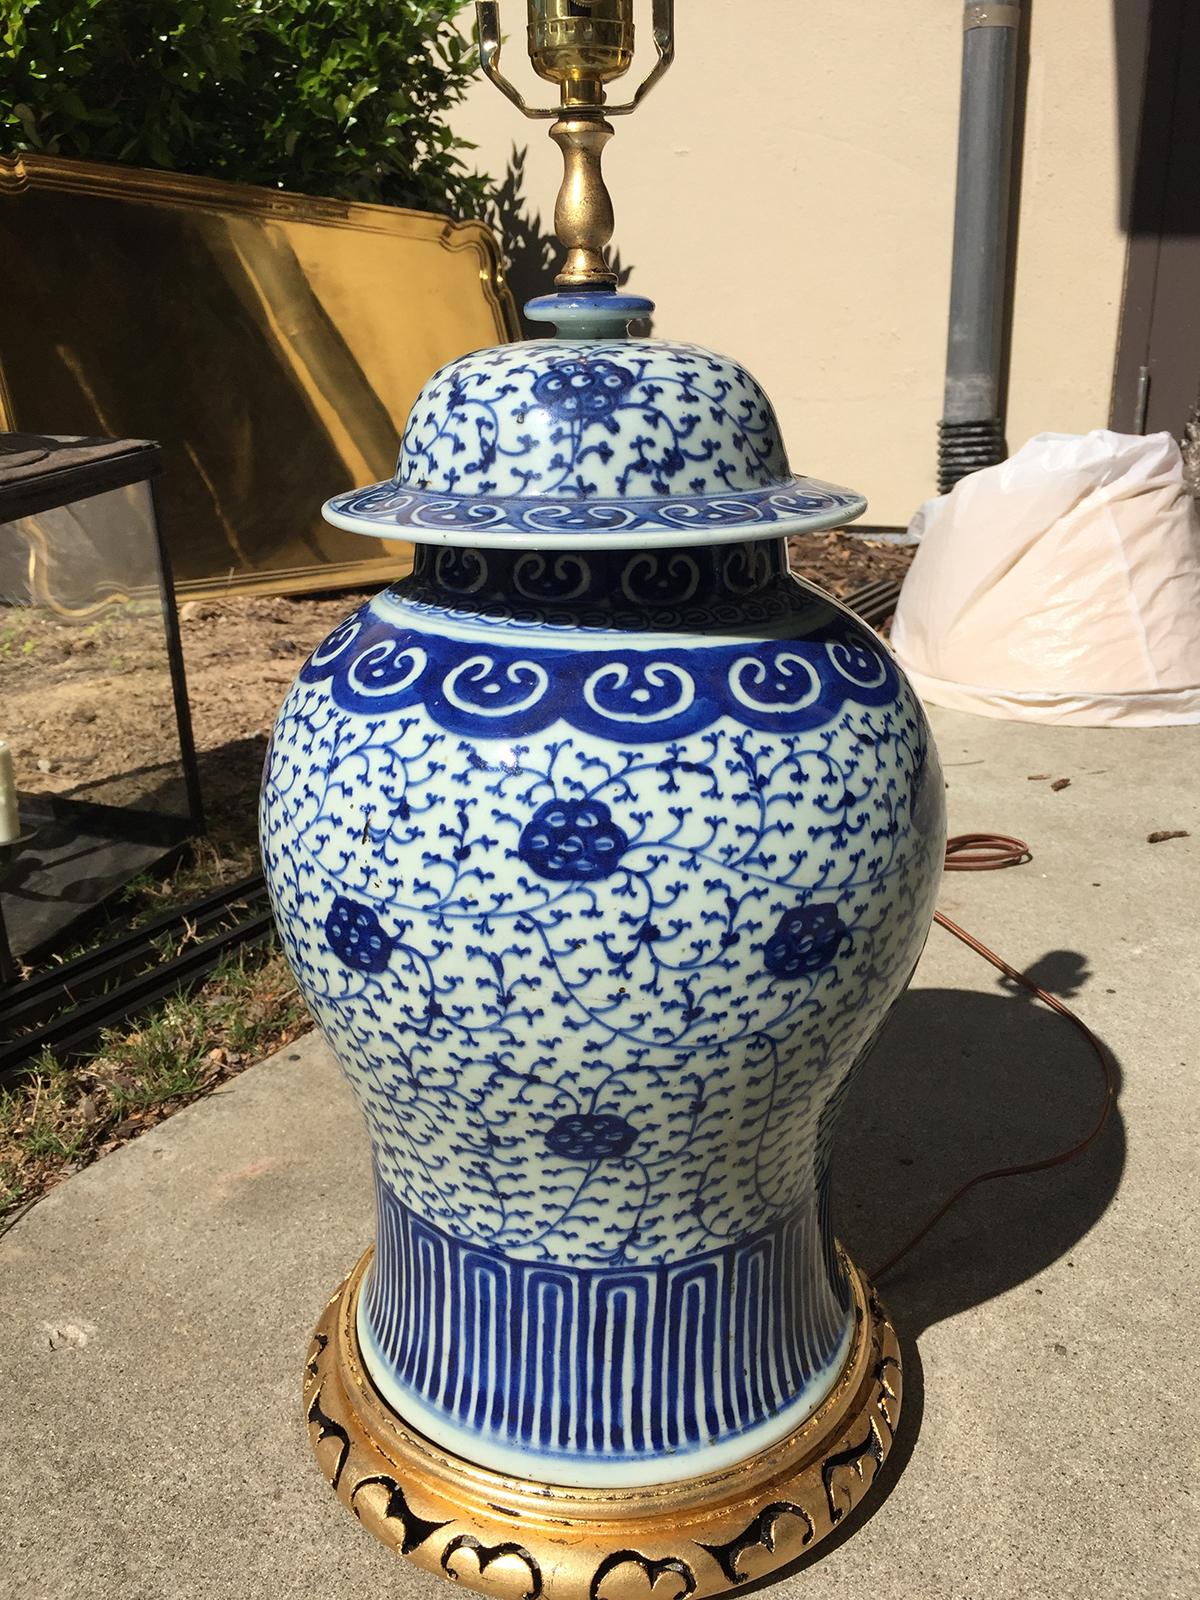 Late 19th century Chinese blue & white porcelain lidded ginger jar as lamp on custom giltwood base
New wiring.